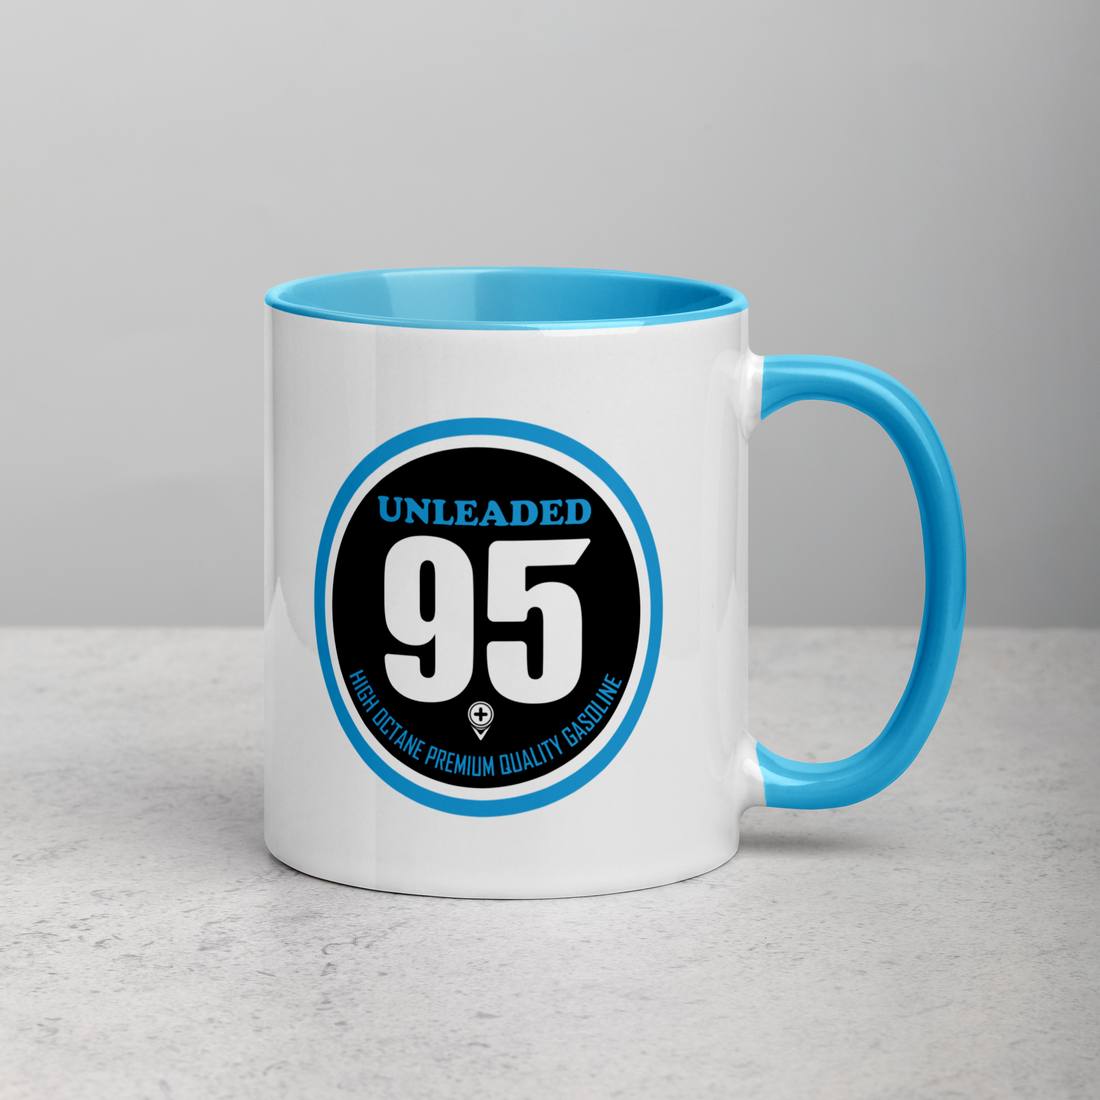 UNLEADED 95 Ceramic Racing Mug